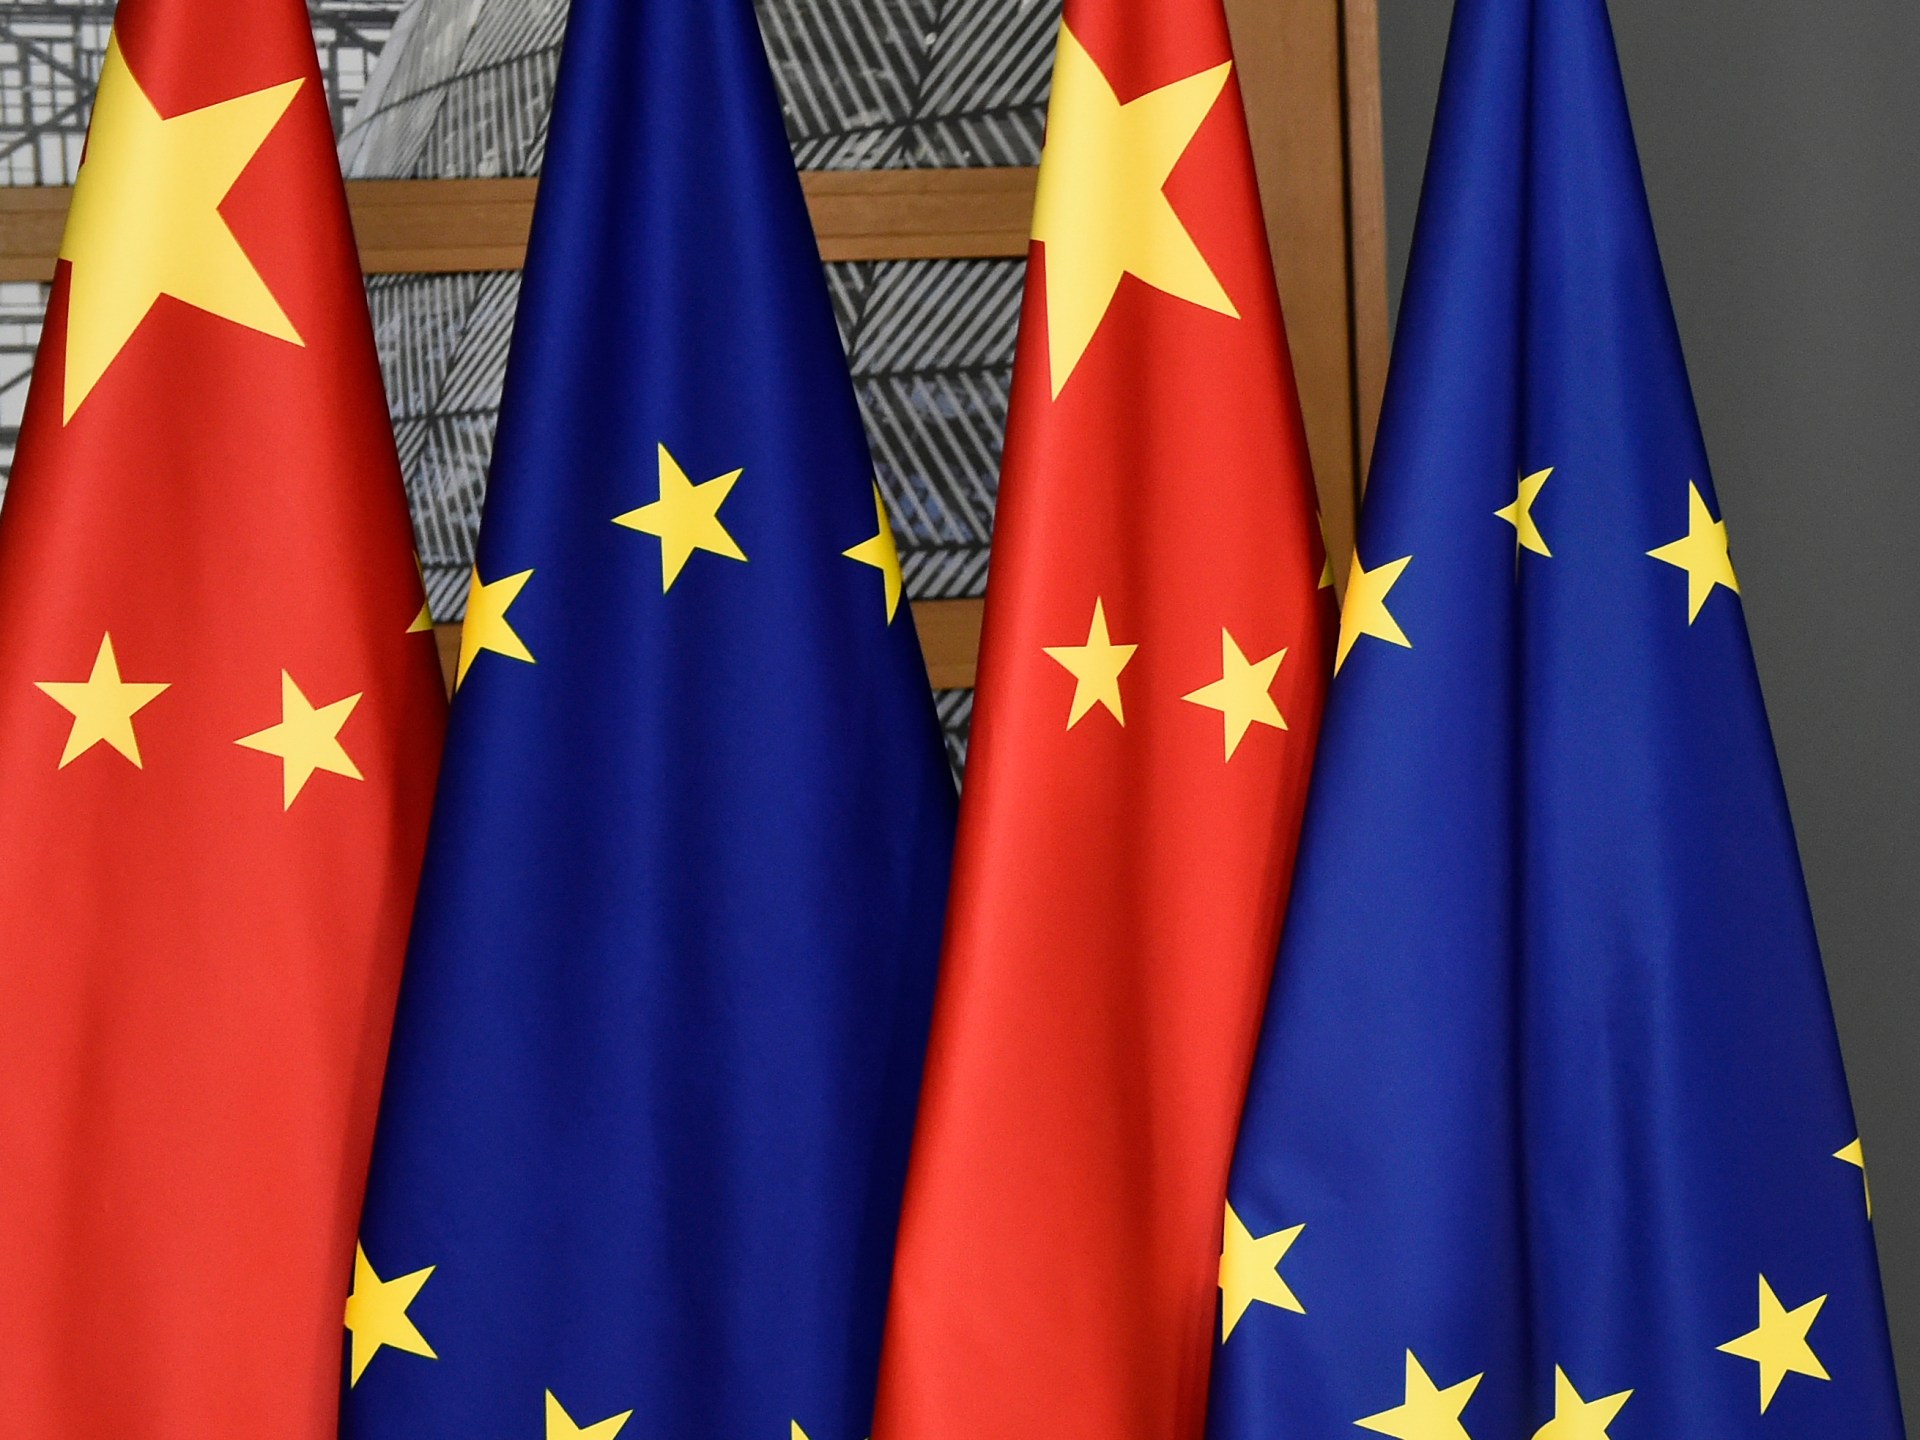 China ‘gravely concerned’ over EU raids on security equipment company | Economy